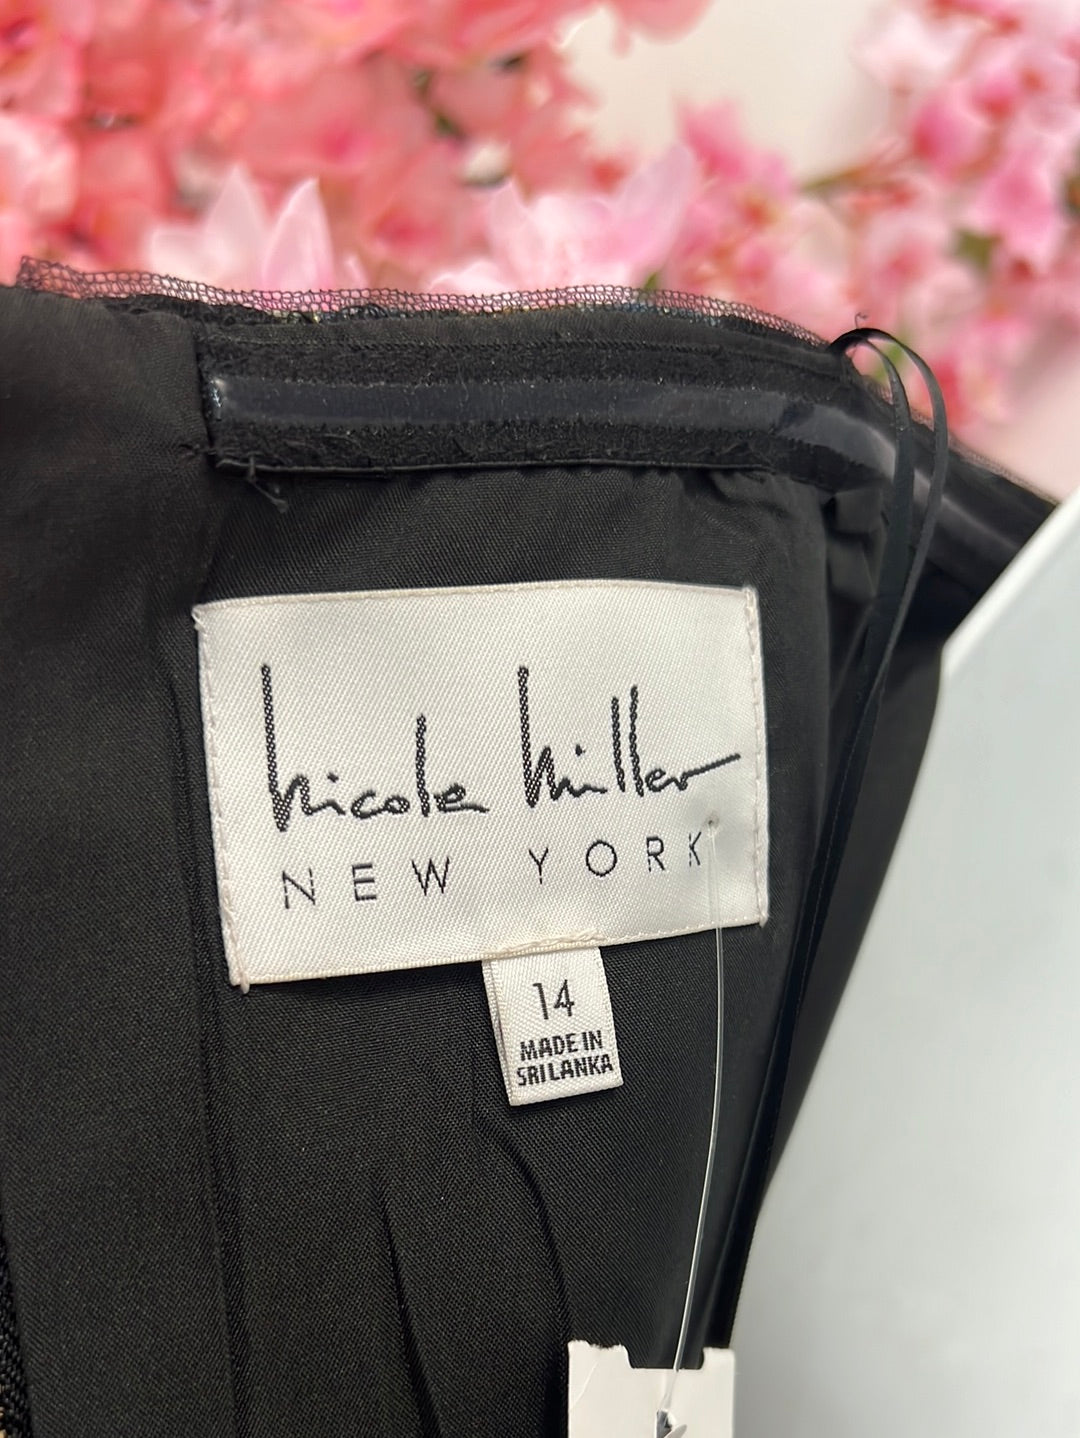 Nicole Miller New York Strapless Black Floral Dress 14